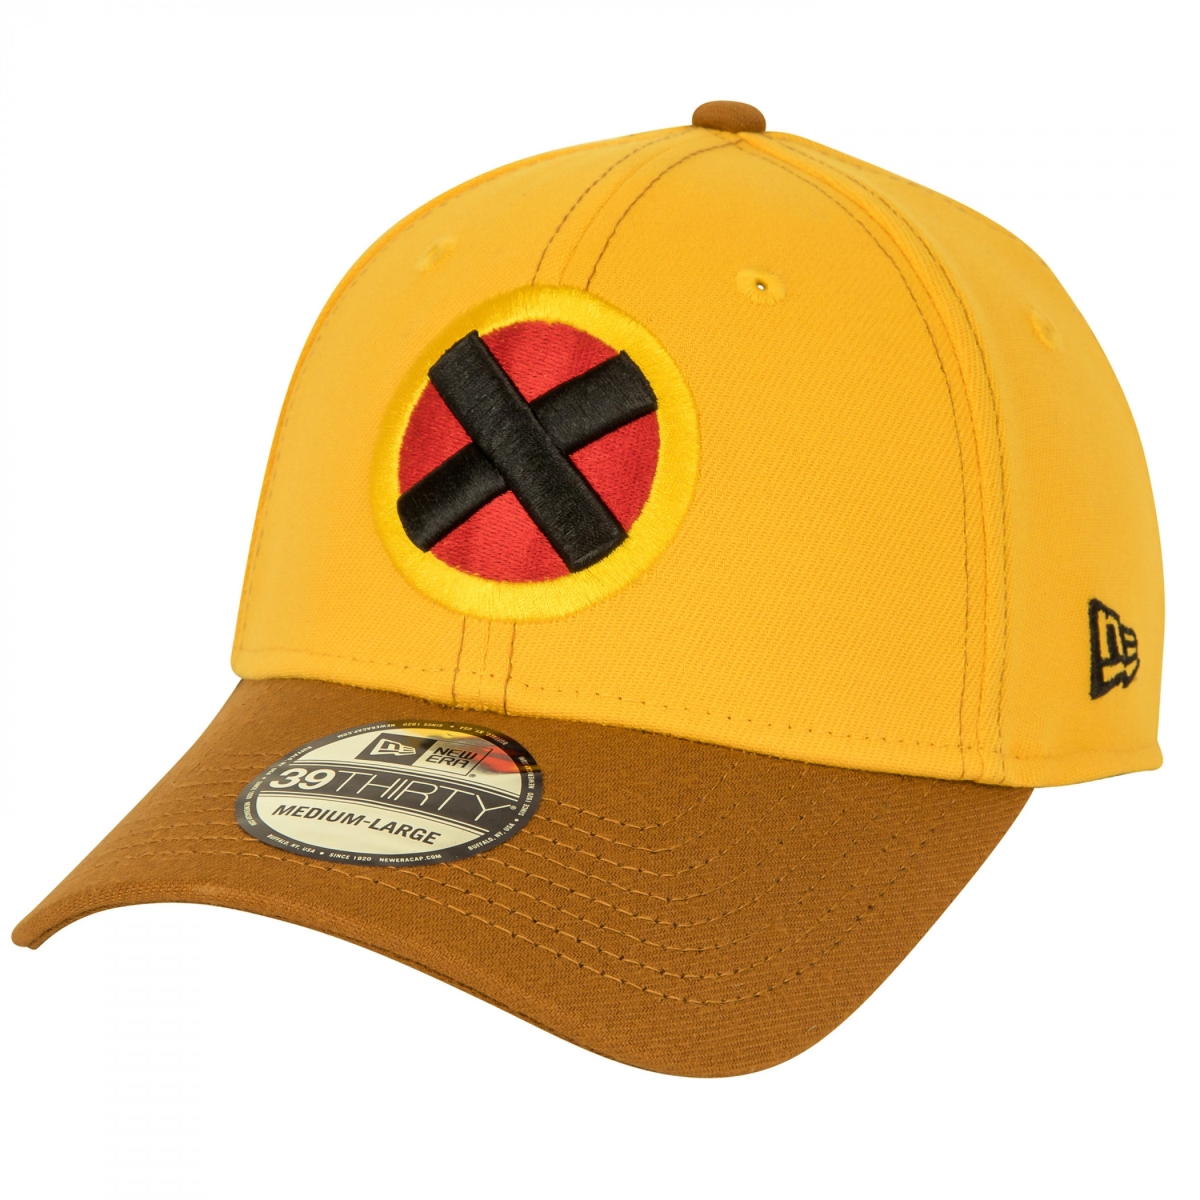 Wolverine 861596-medium-la Uncanny X-Men New Era 39Thirty Fitted Hat, Yellow & Brown - Medium & Large -  Wolverine Publishing LLC, 861596-medium/la